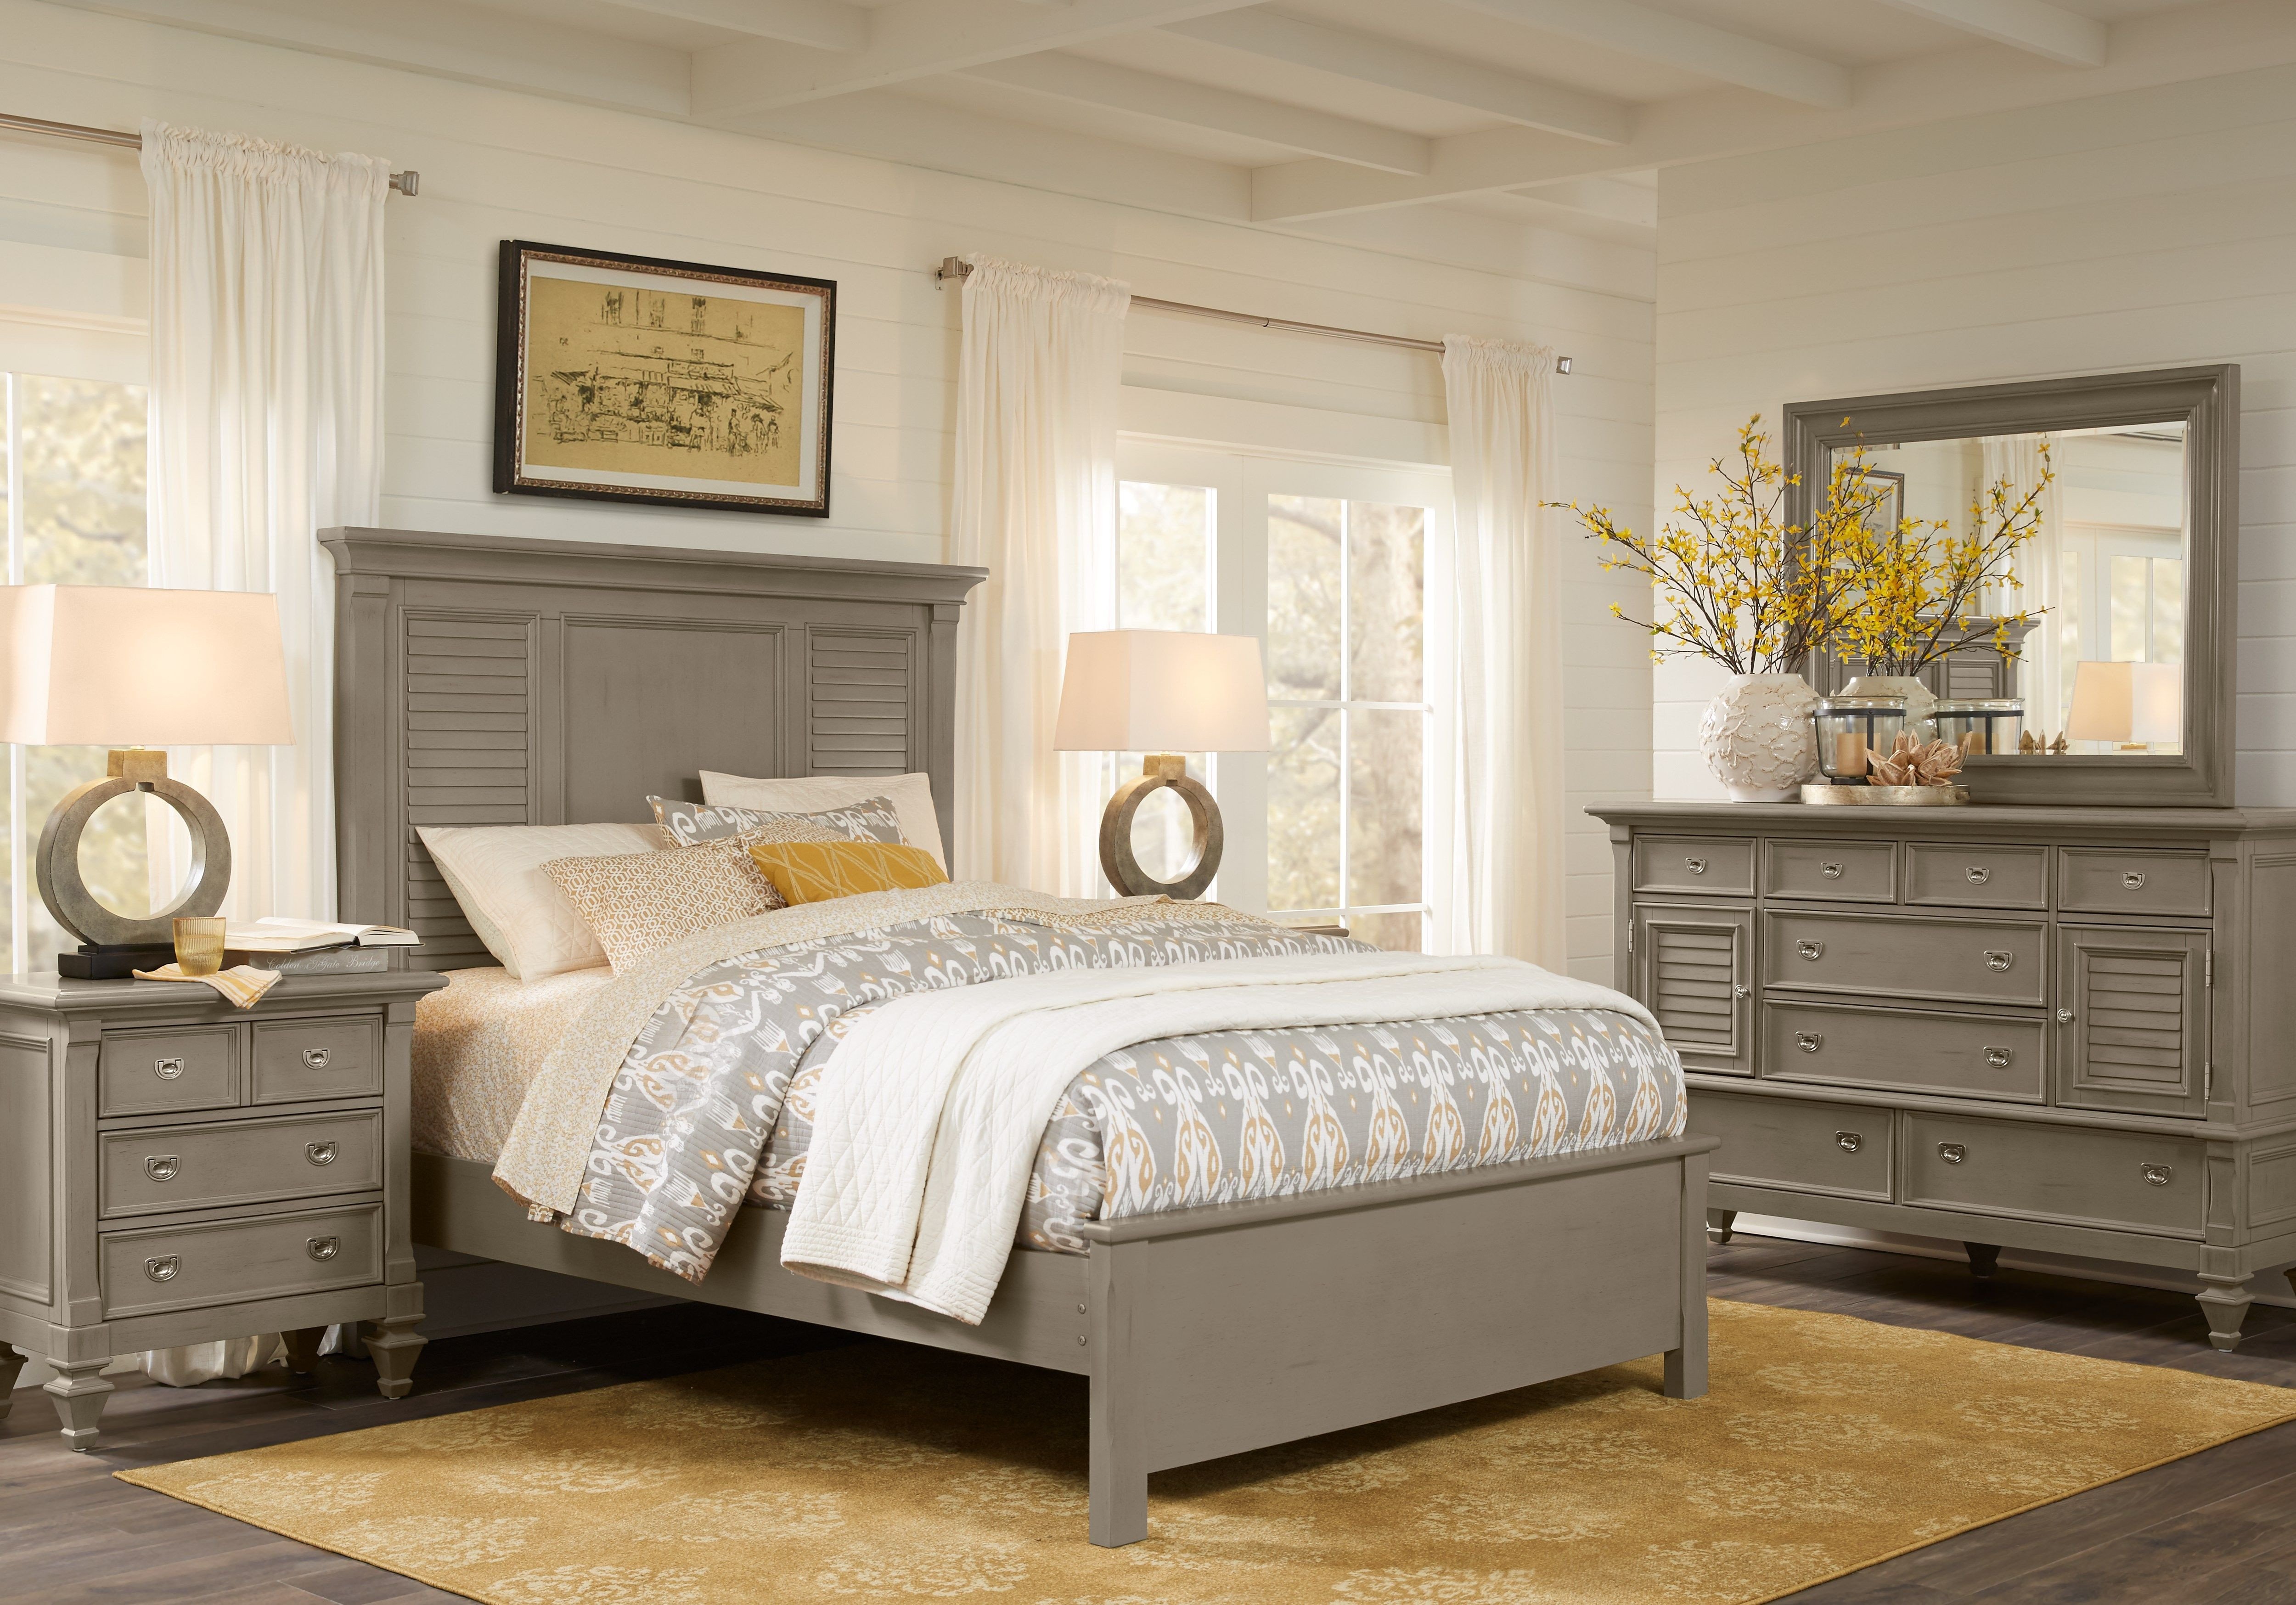 King Bedroom Set for Sale New Belmar Gray 5 Pc King Bedroom Decor In 2019